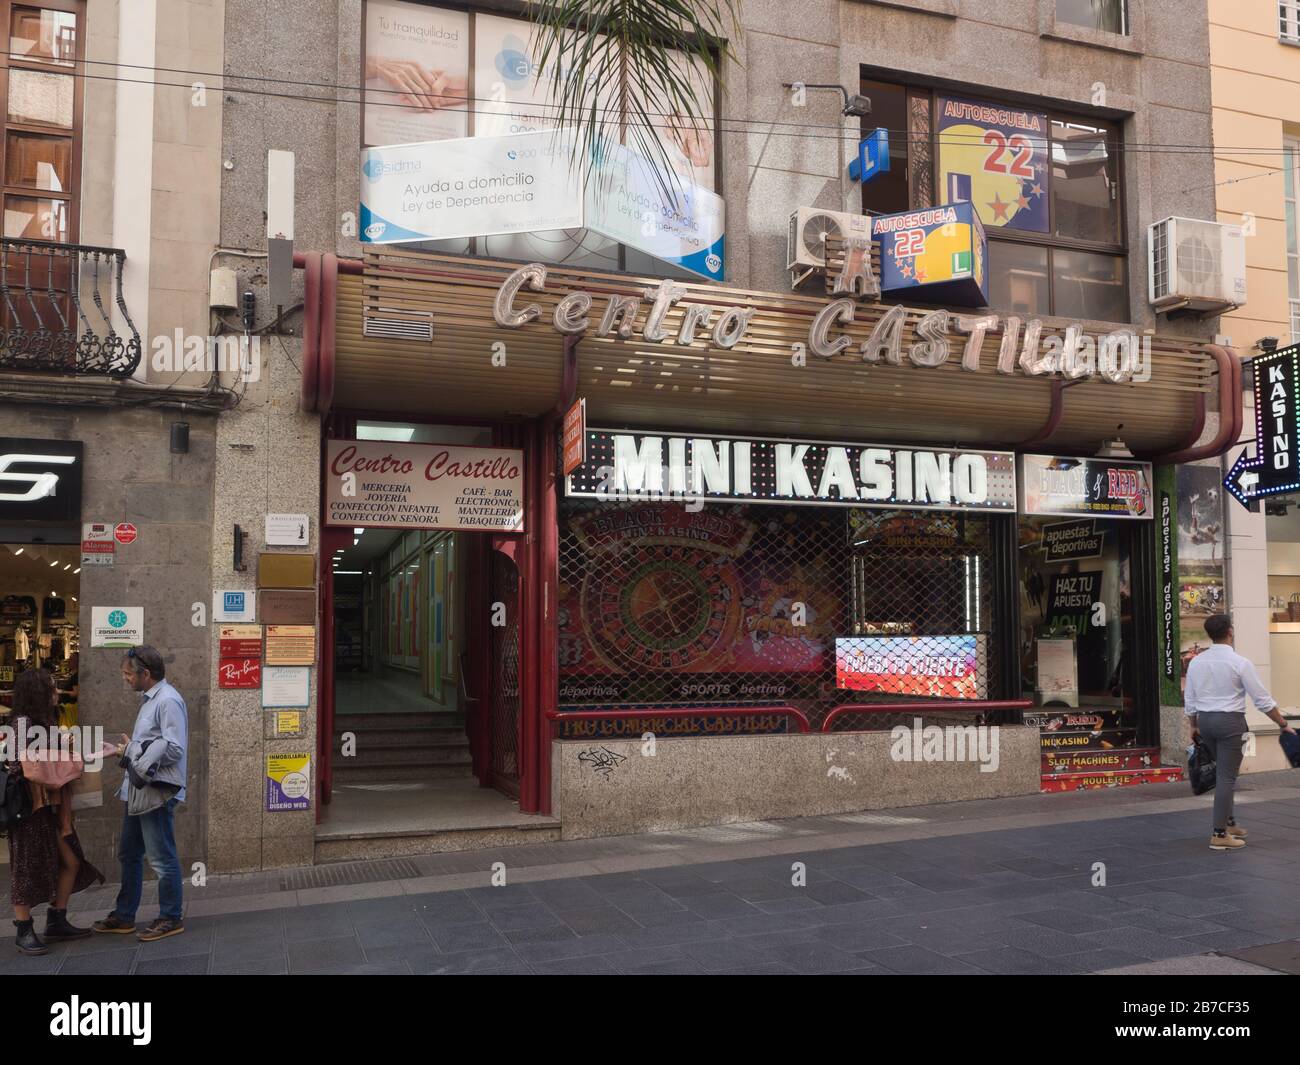 Centro Castillo, Mini Casino,  shop in Santa cruz, Tenerife Spain Stock Photo